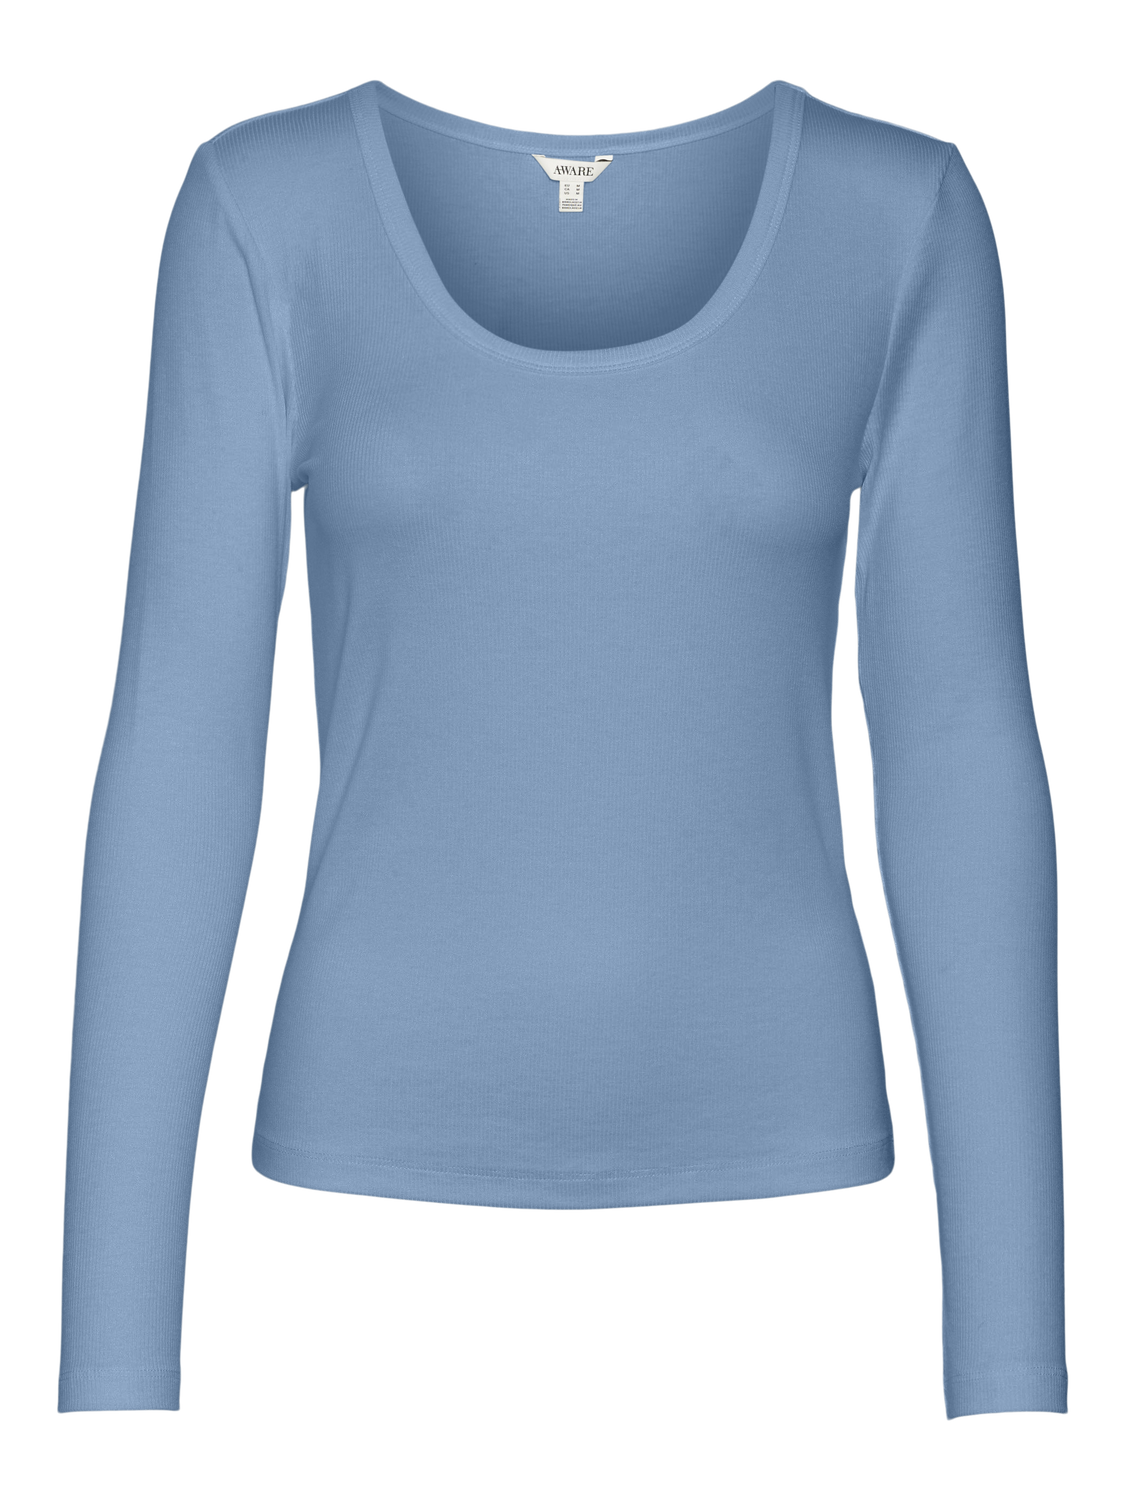 VMIRWINA T-Shirts & Tops - Dusk Blue